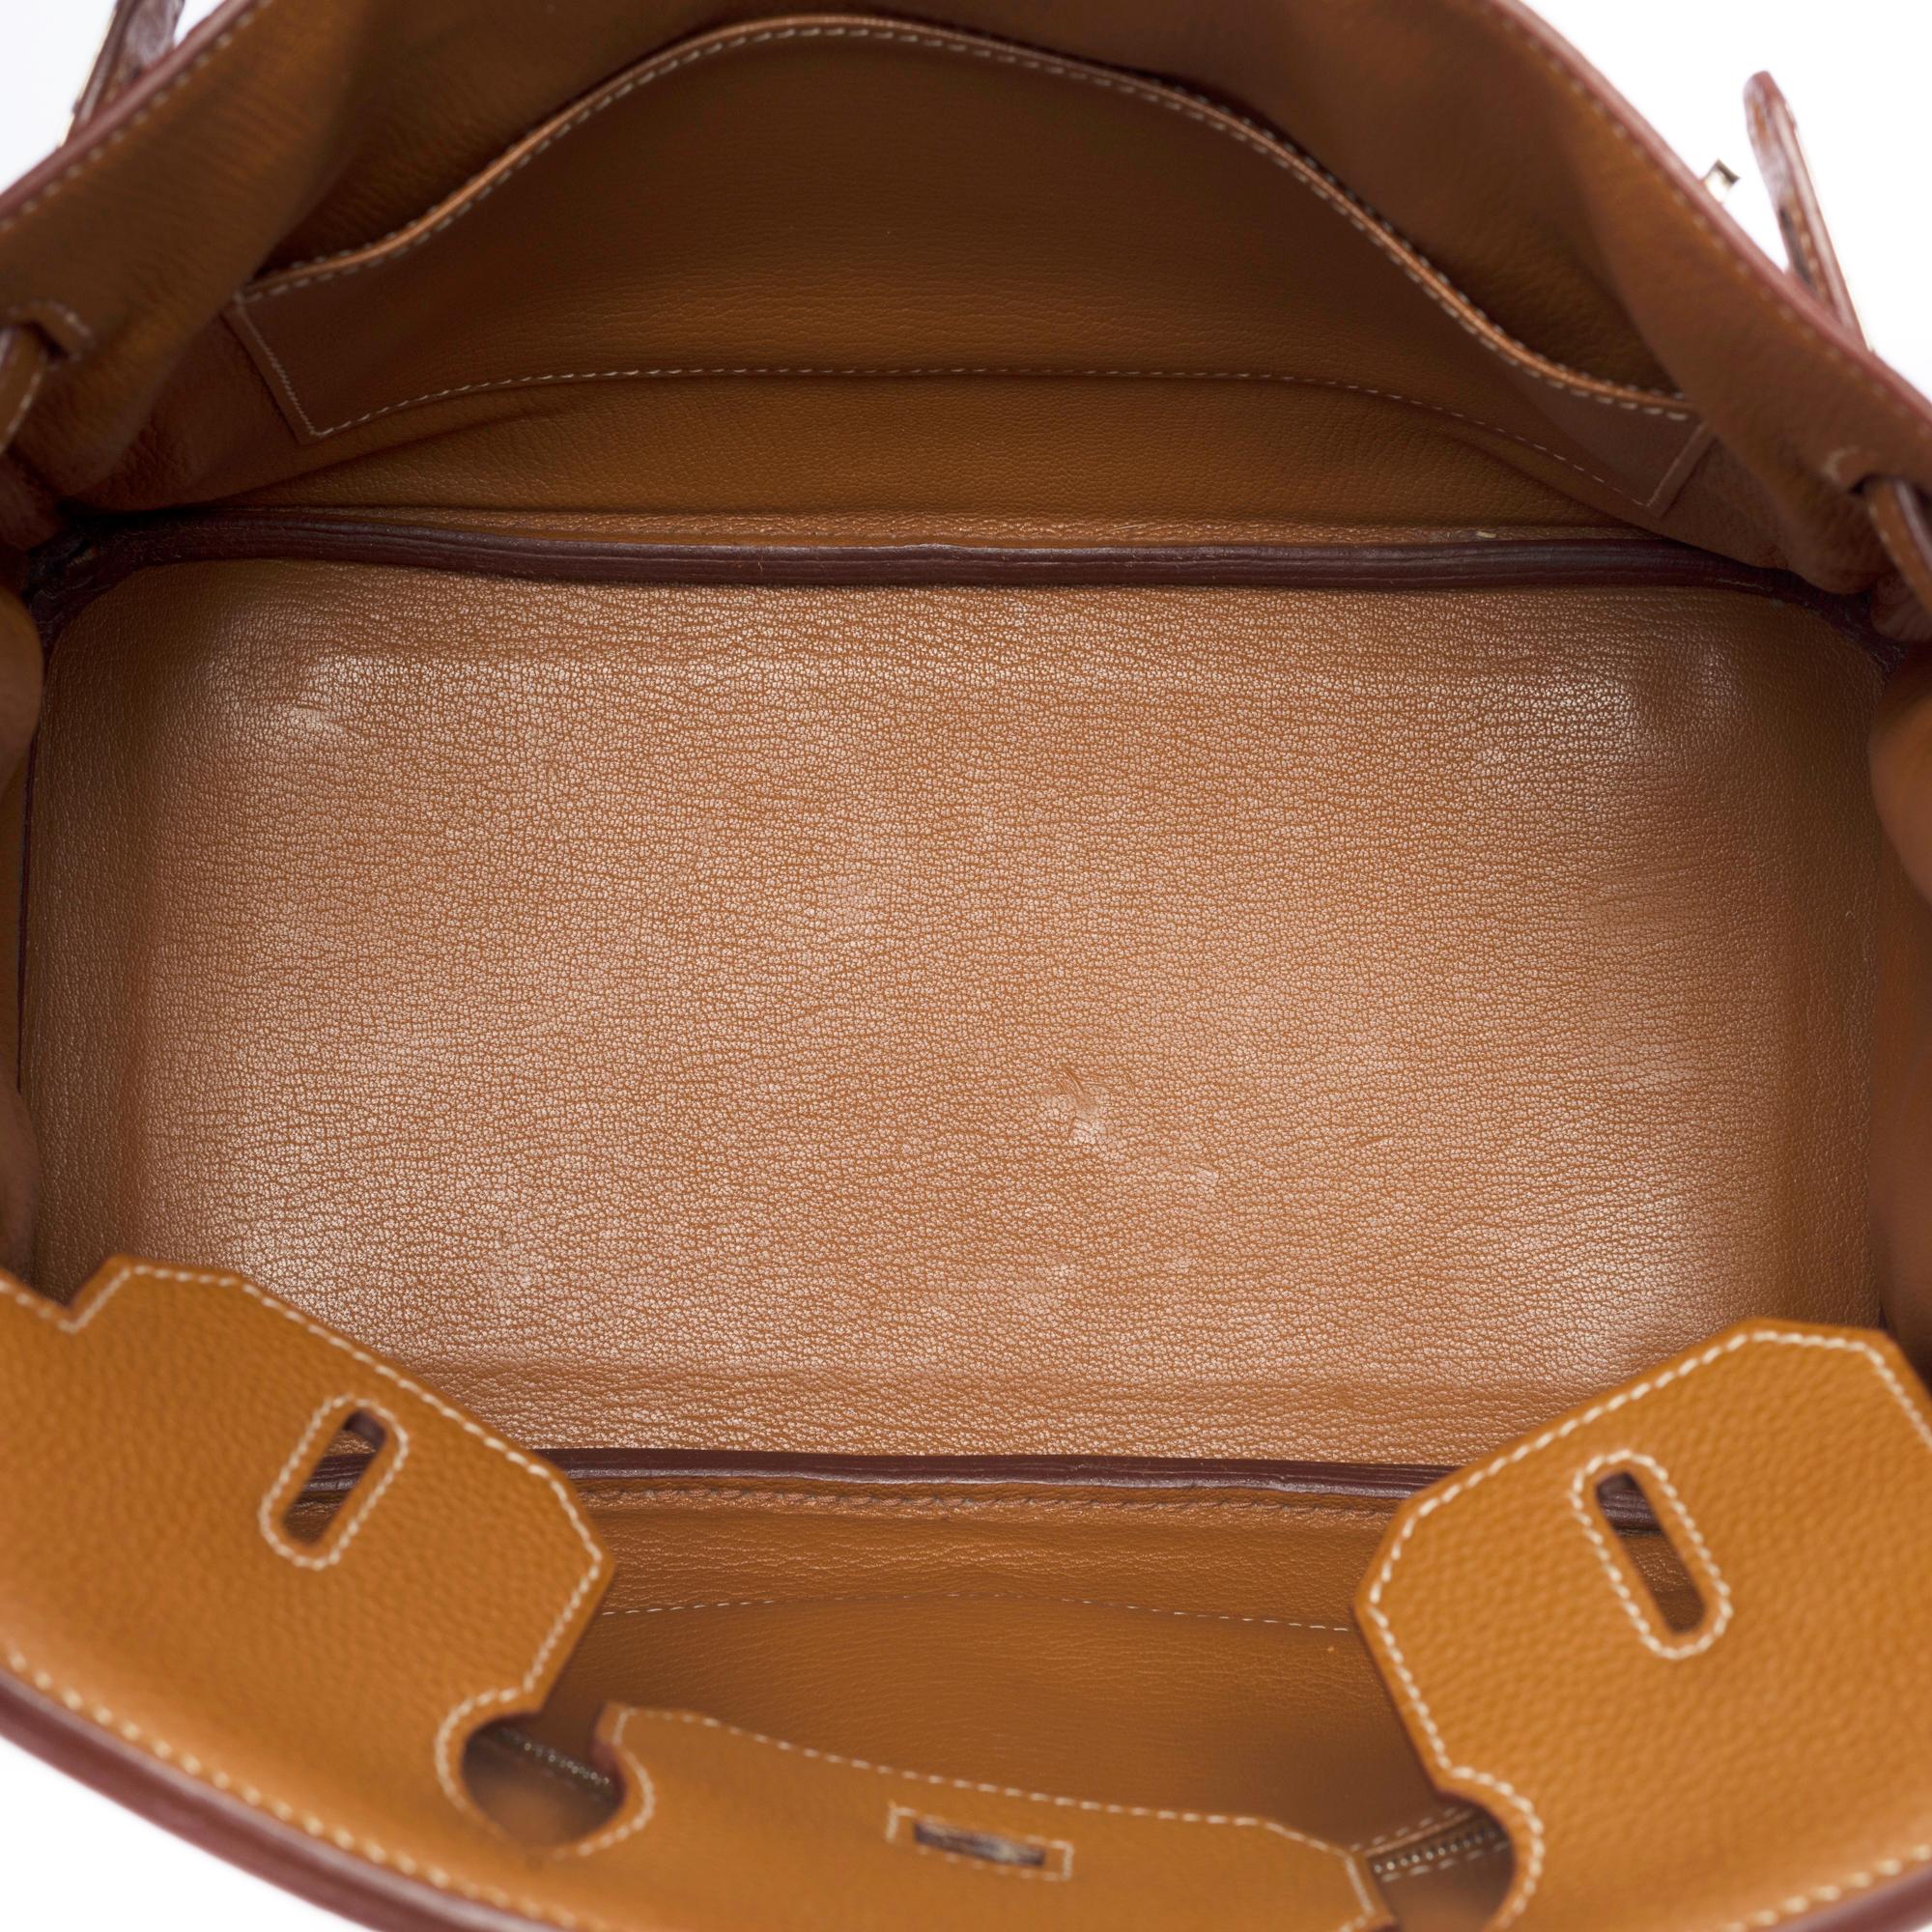 Women's Amazing Hermès Birkin 30 handbag in Togo Gold leather, SHW